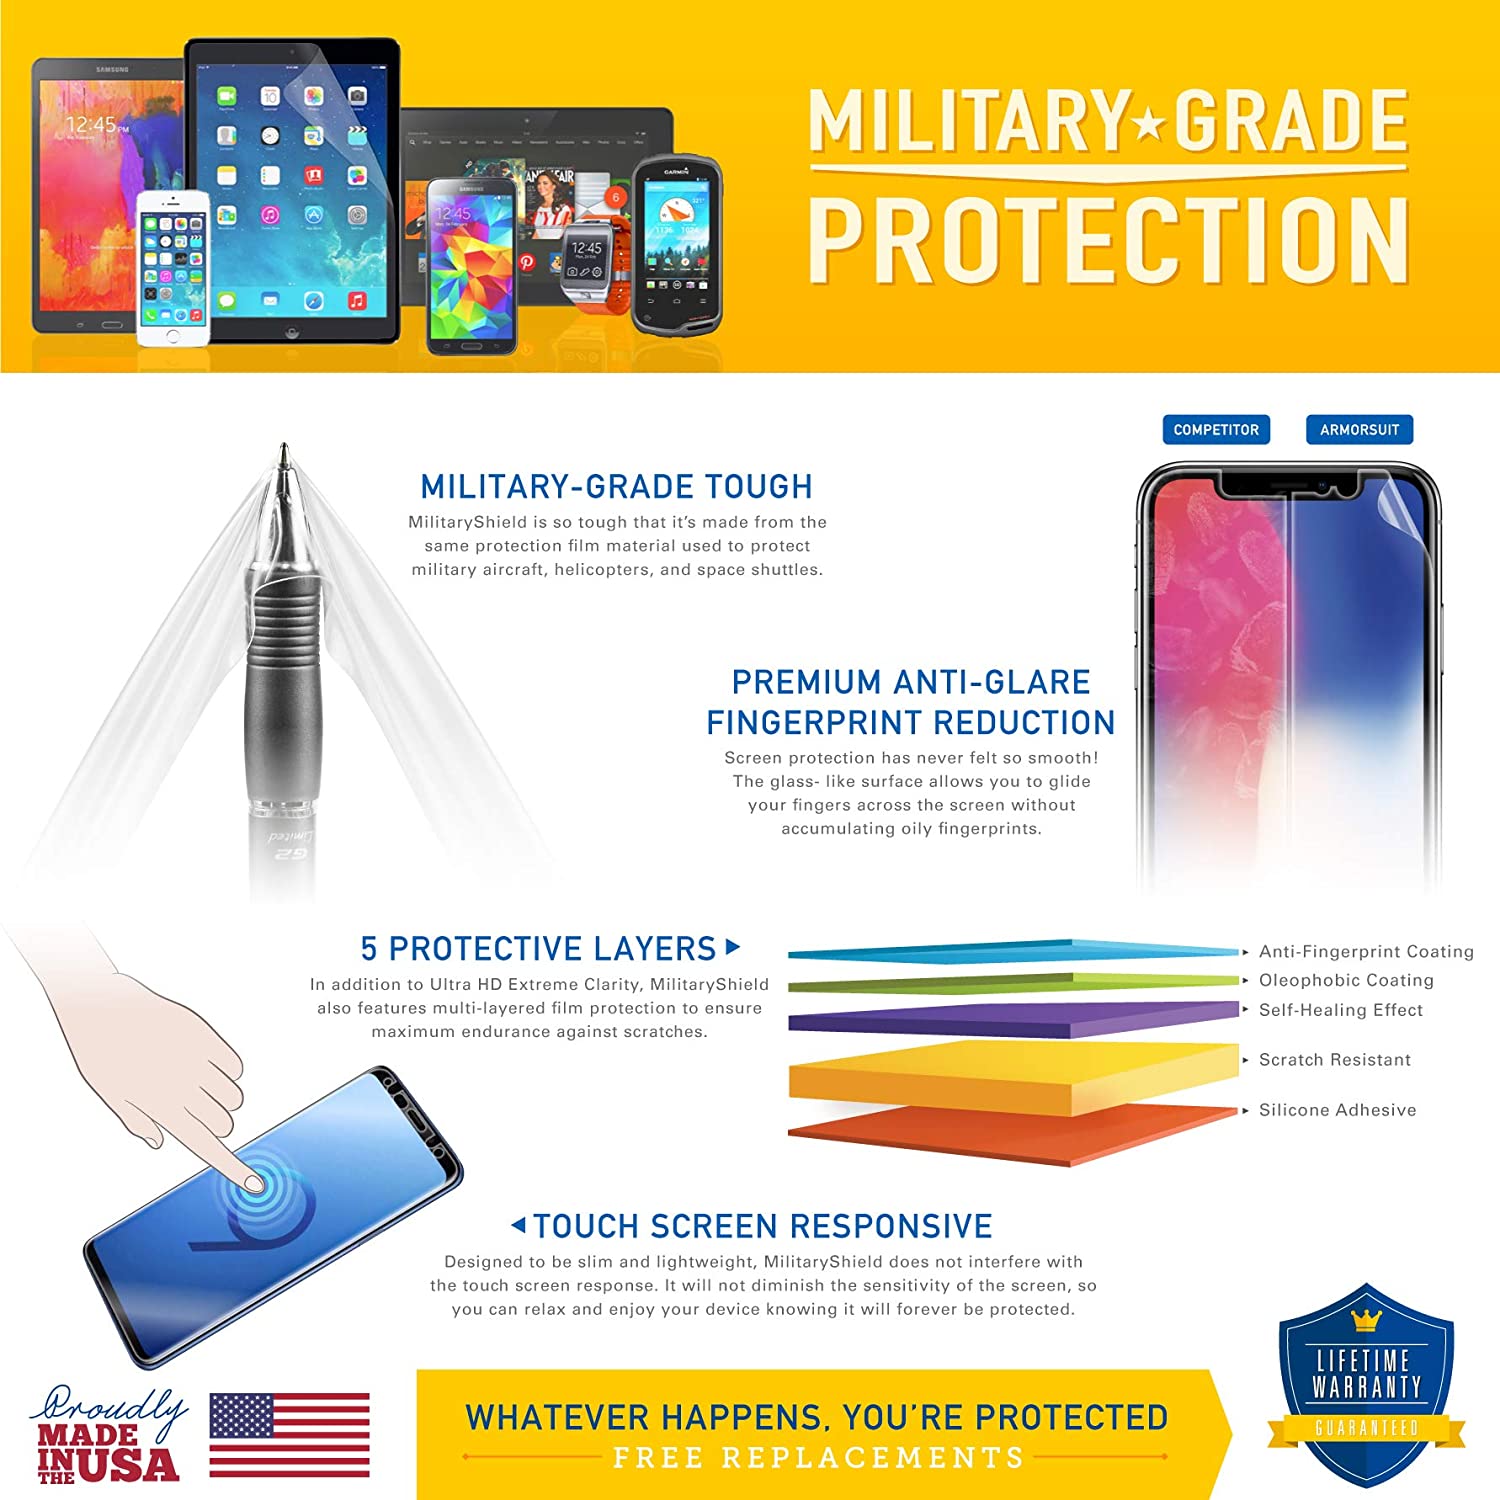 Samsung Galaxy S5 Sport Screen Protector + Carbon Fiber Skin Protector